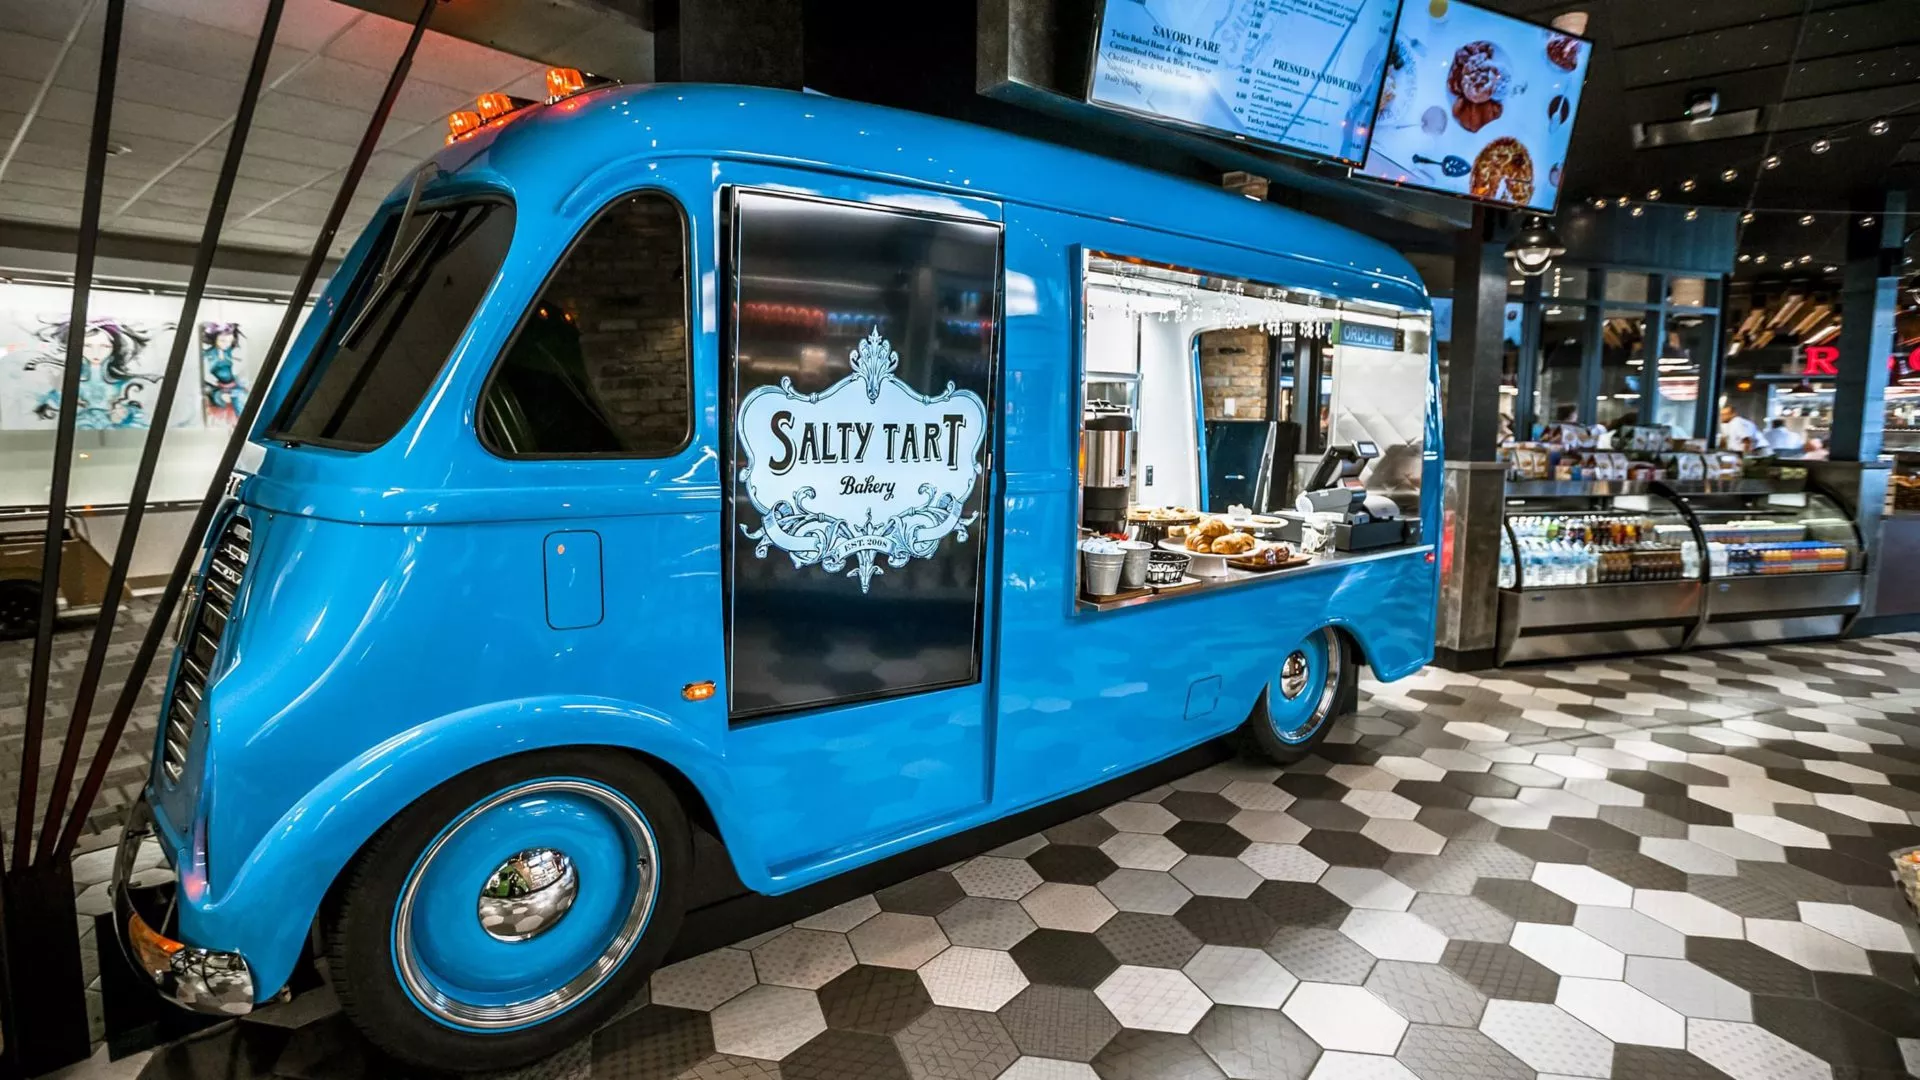 salty tart bakery truck in food truck alley at saint paul international airport